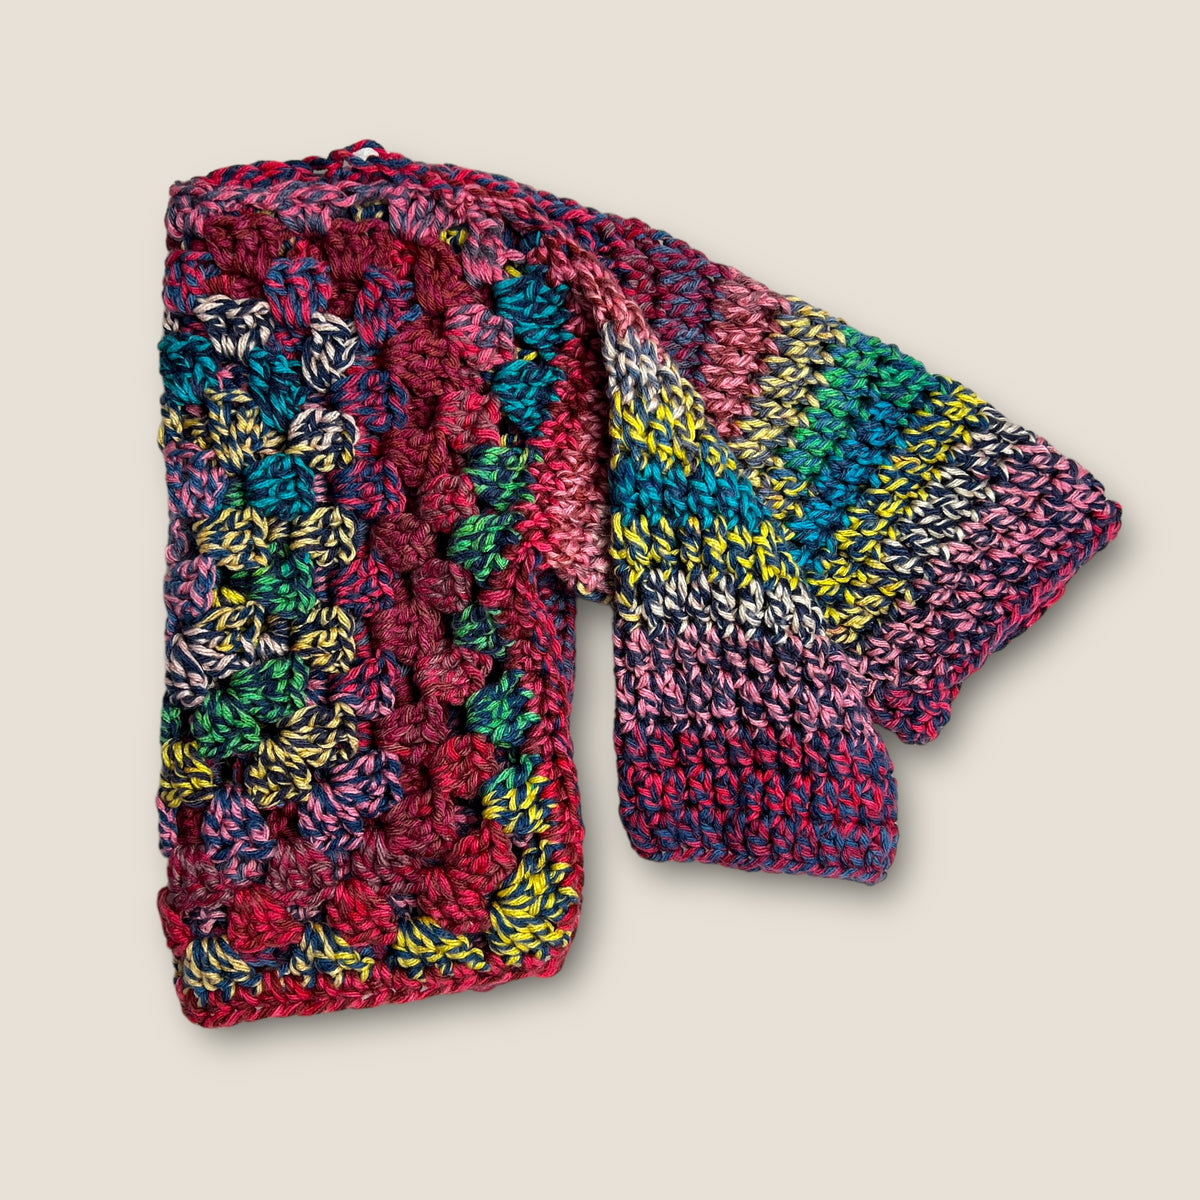 Handmade Crochet Top size 3-4 years